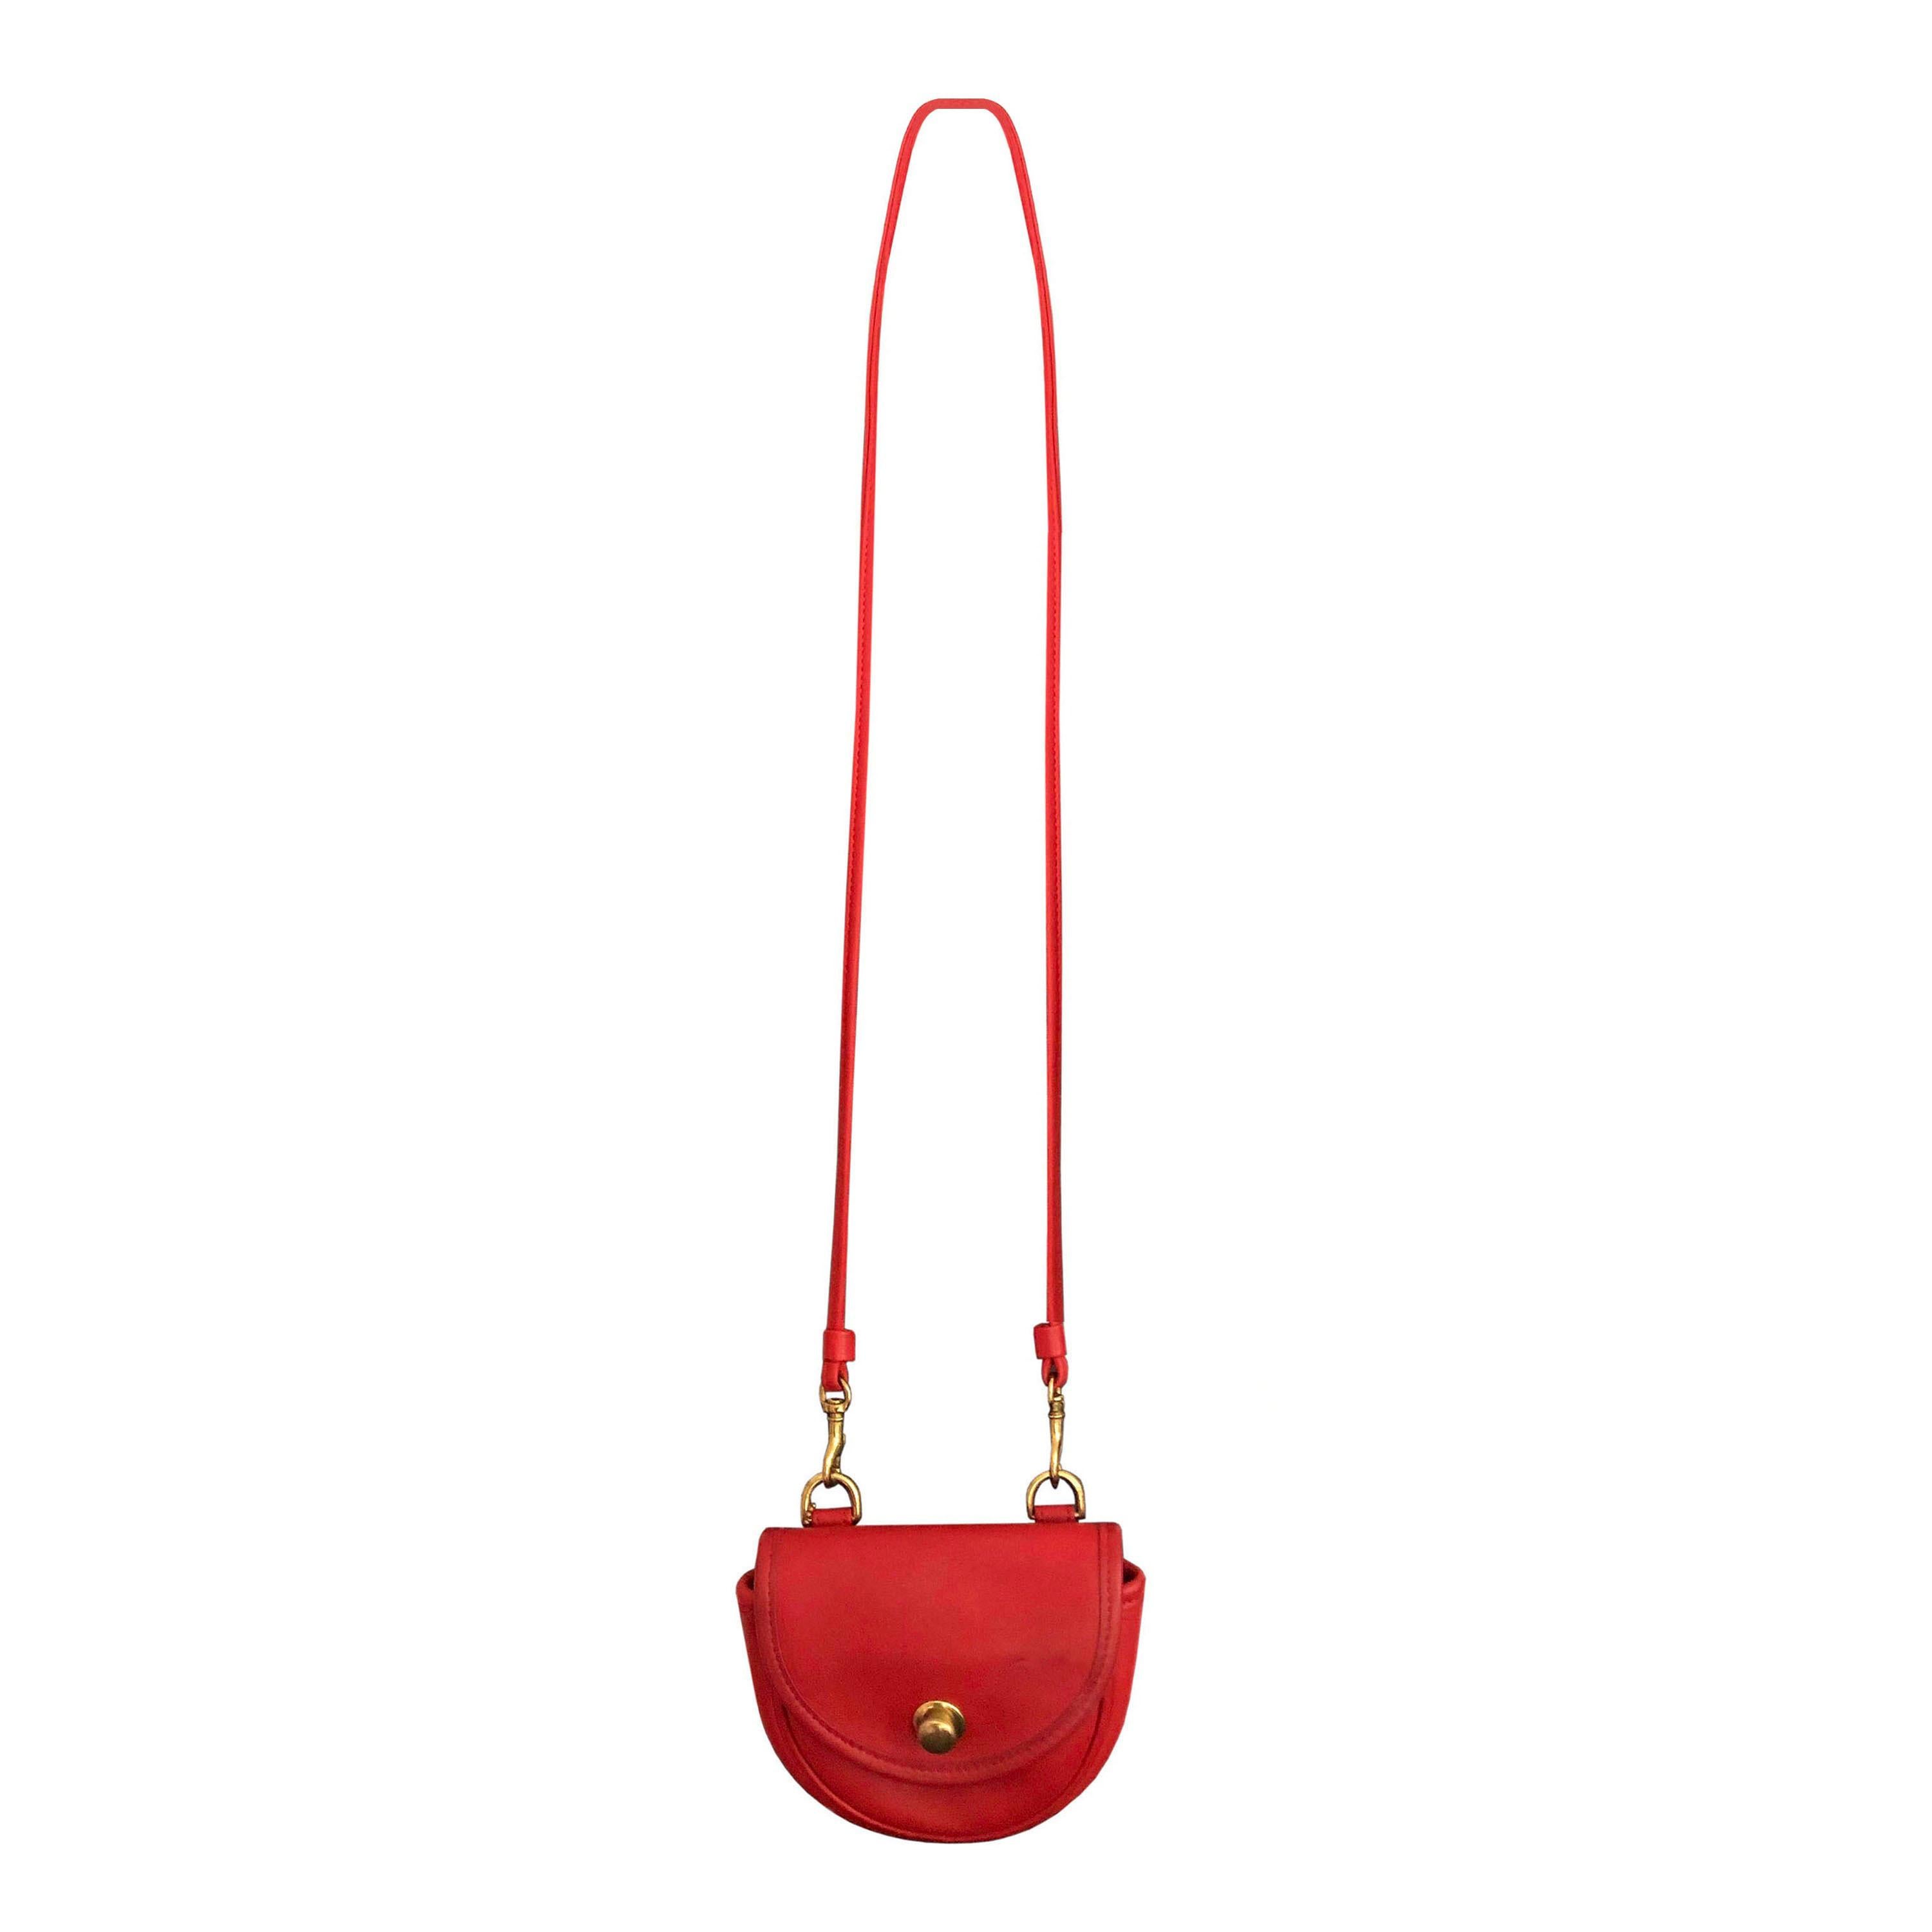 Product Details: Coach - 1980s Vintage - Bag + Belt Bag Set - Red Leather + Brass Hardware - Detachable Bag Strap & Belt - Worn Two-Ways - x 2 Inner Pockets - Belt = Size L 
Era: 1980s Vintage
Label: Coach
Fabric Content: Red Leather + Brass